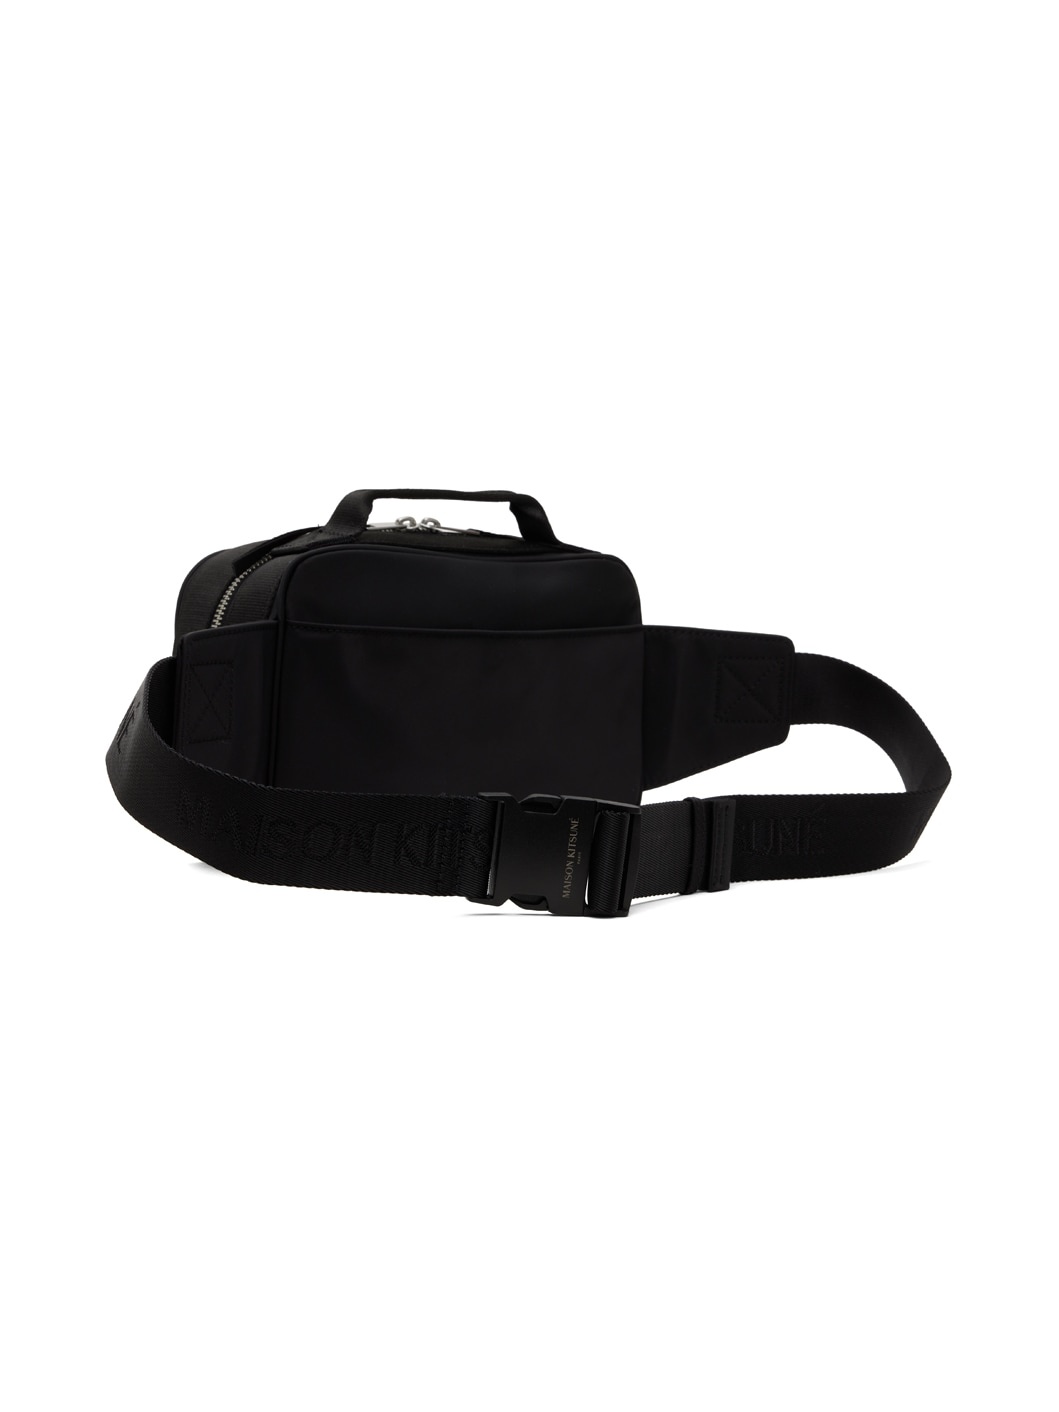 Black 'The Traveller' Bag - 3